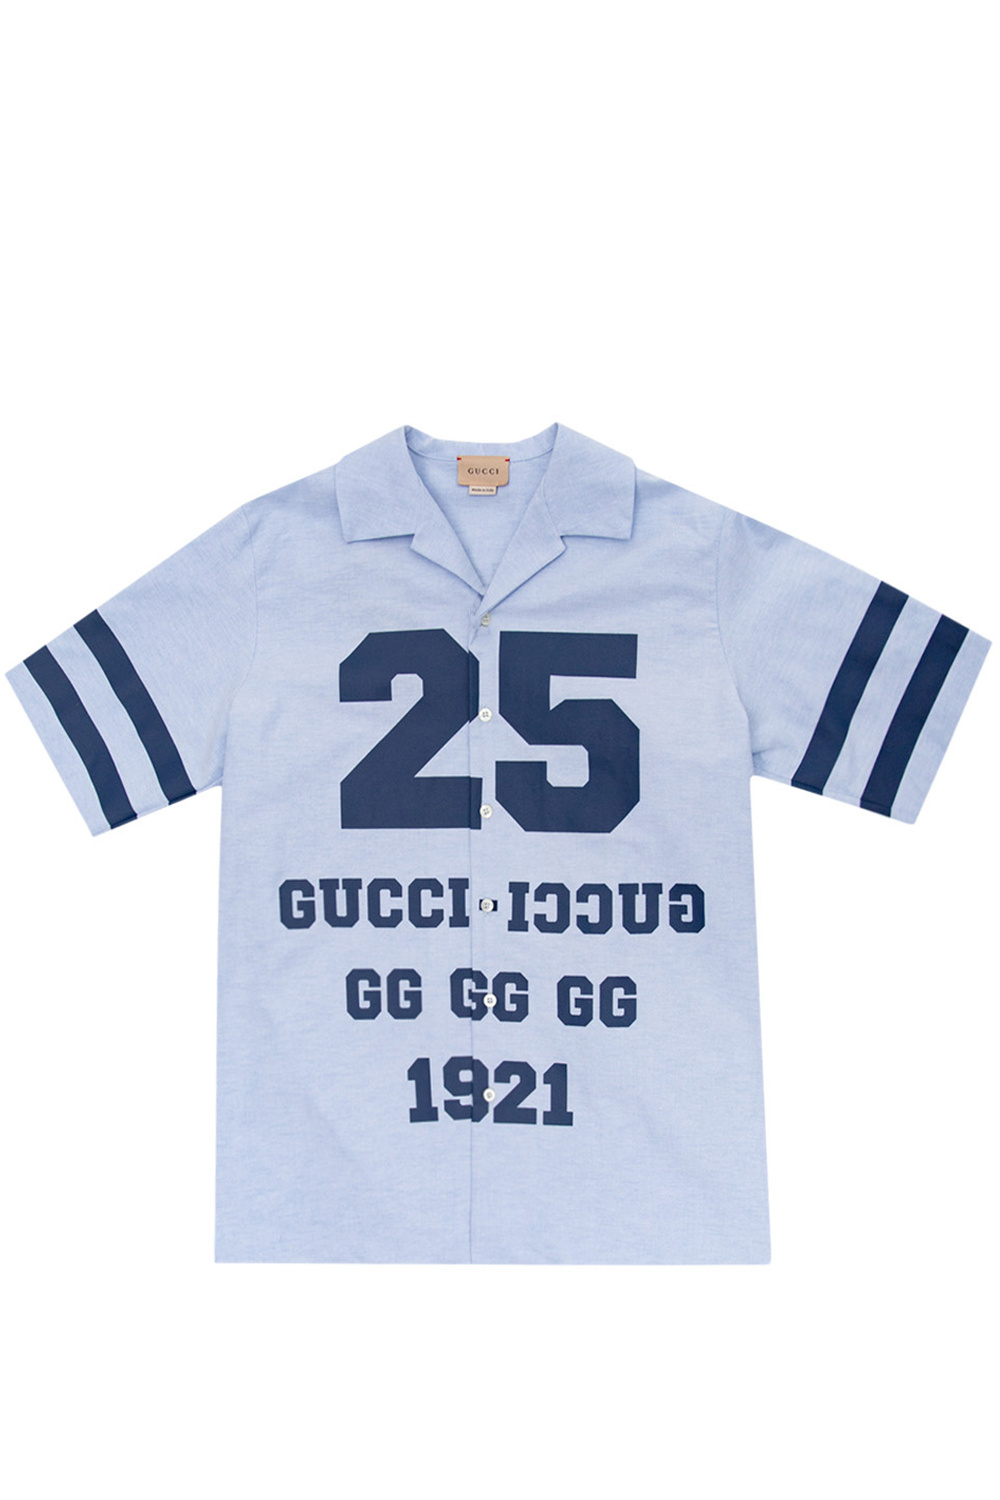 Gucci Kids ‘25 top gucci 1921’ shirt with logo